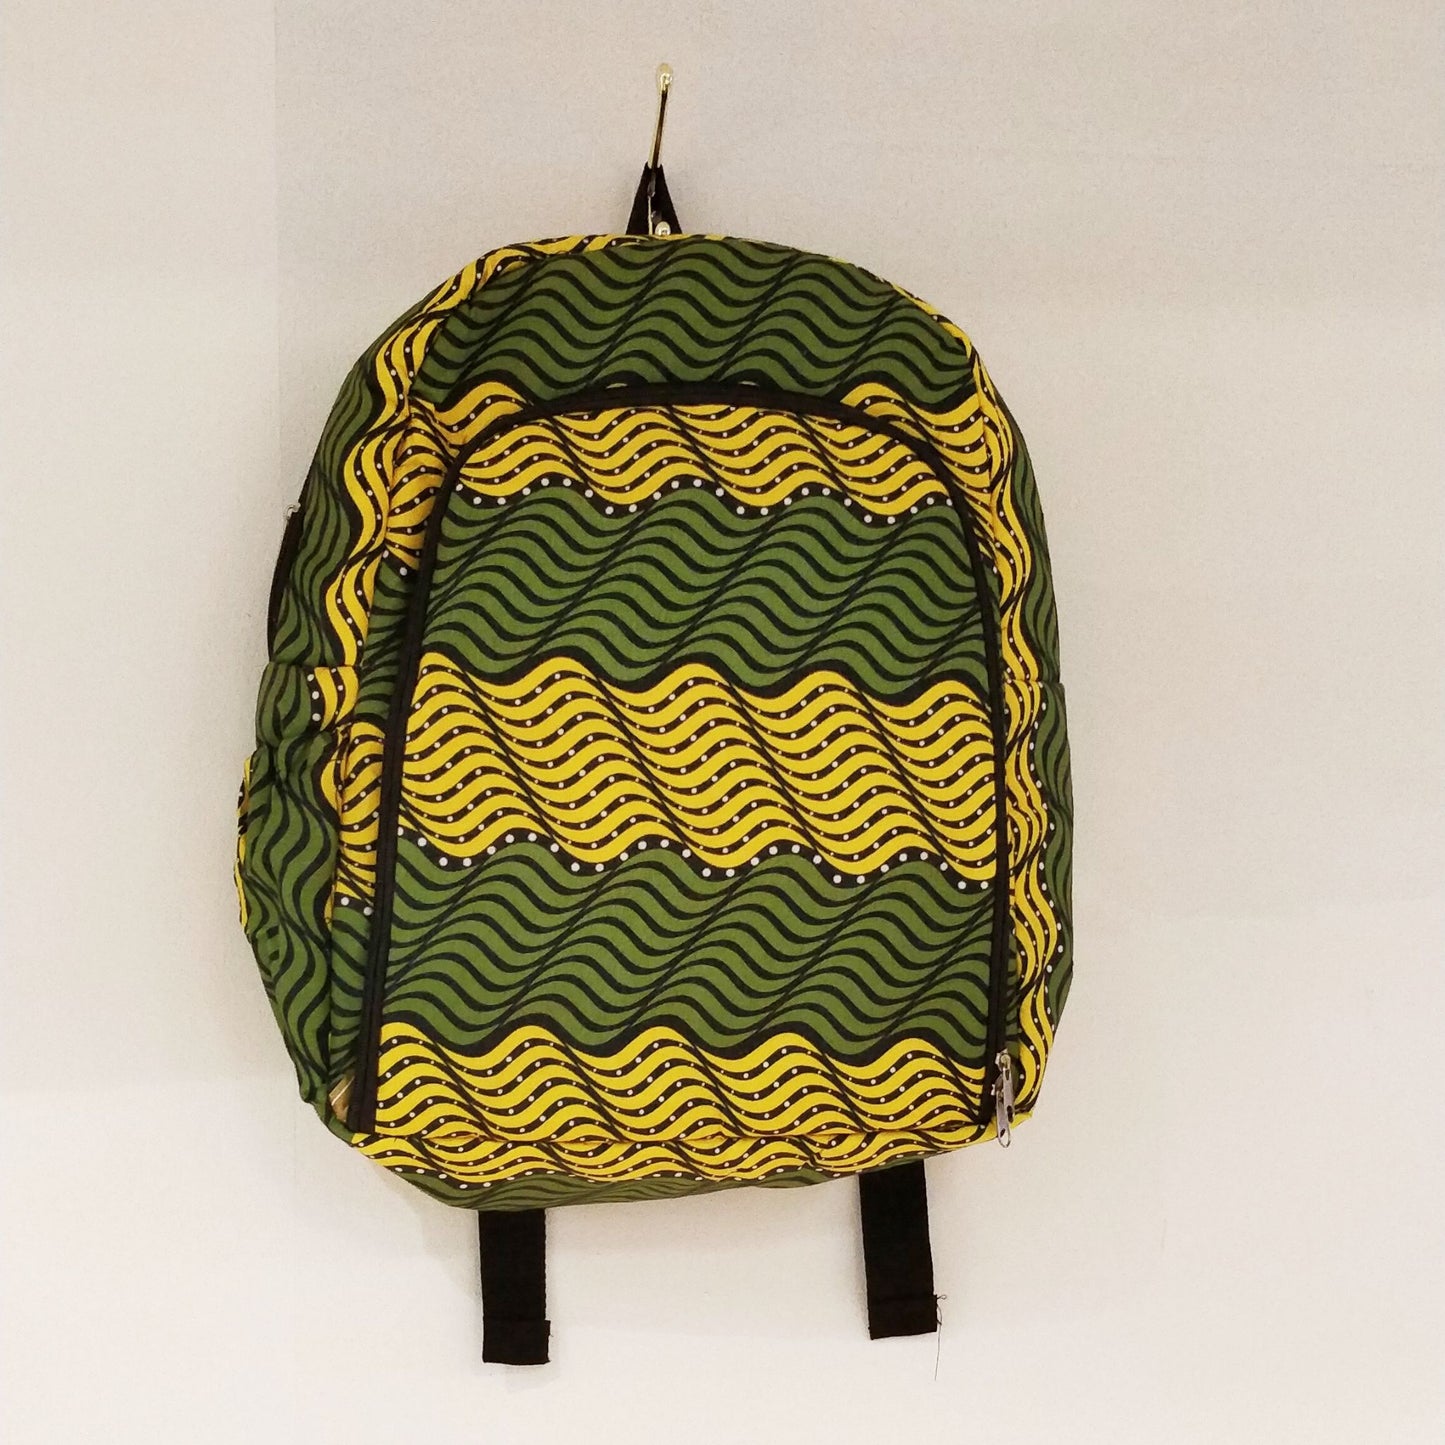 Handmade Backpack Empowering Women in Uganda - yellow and green pattern